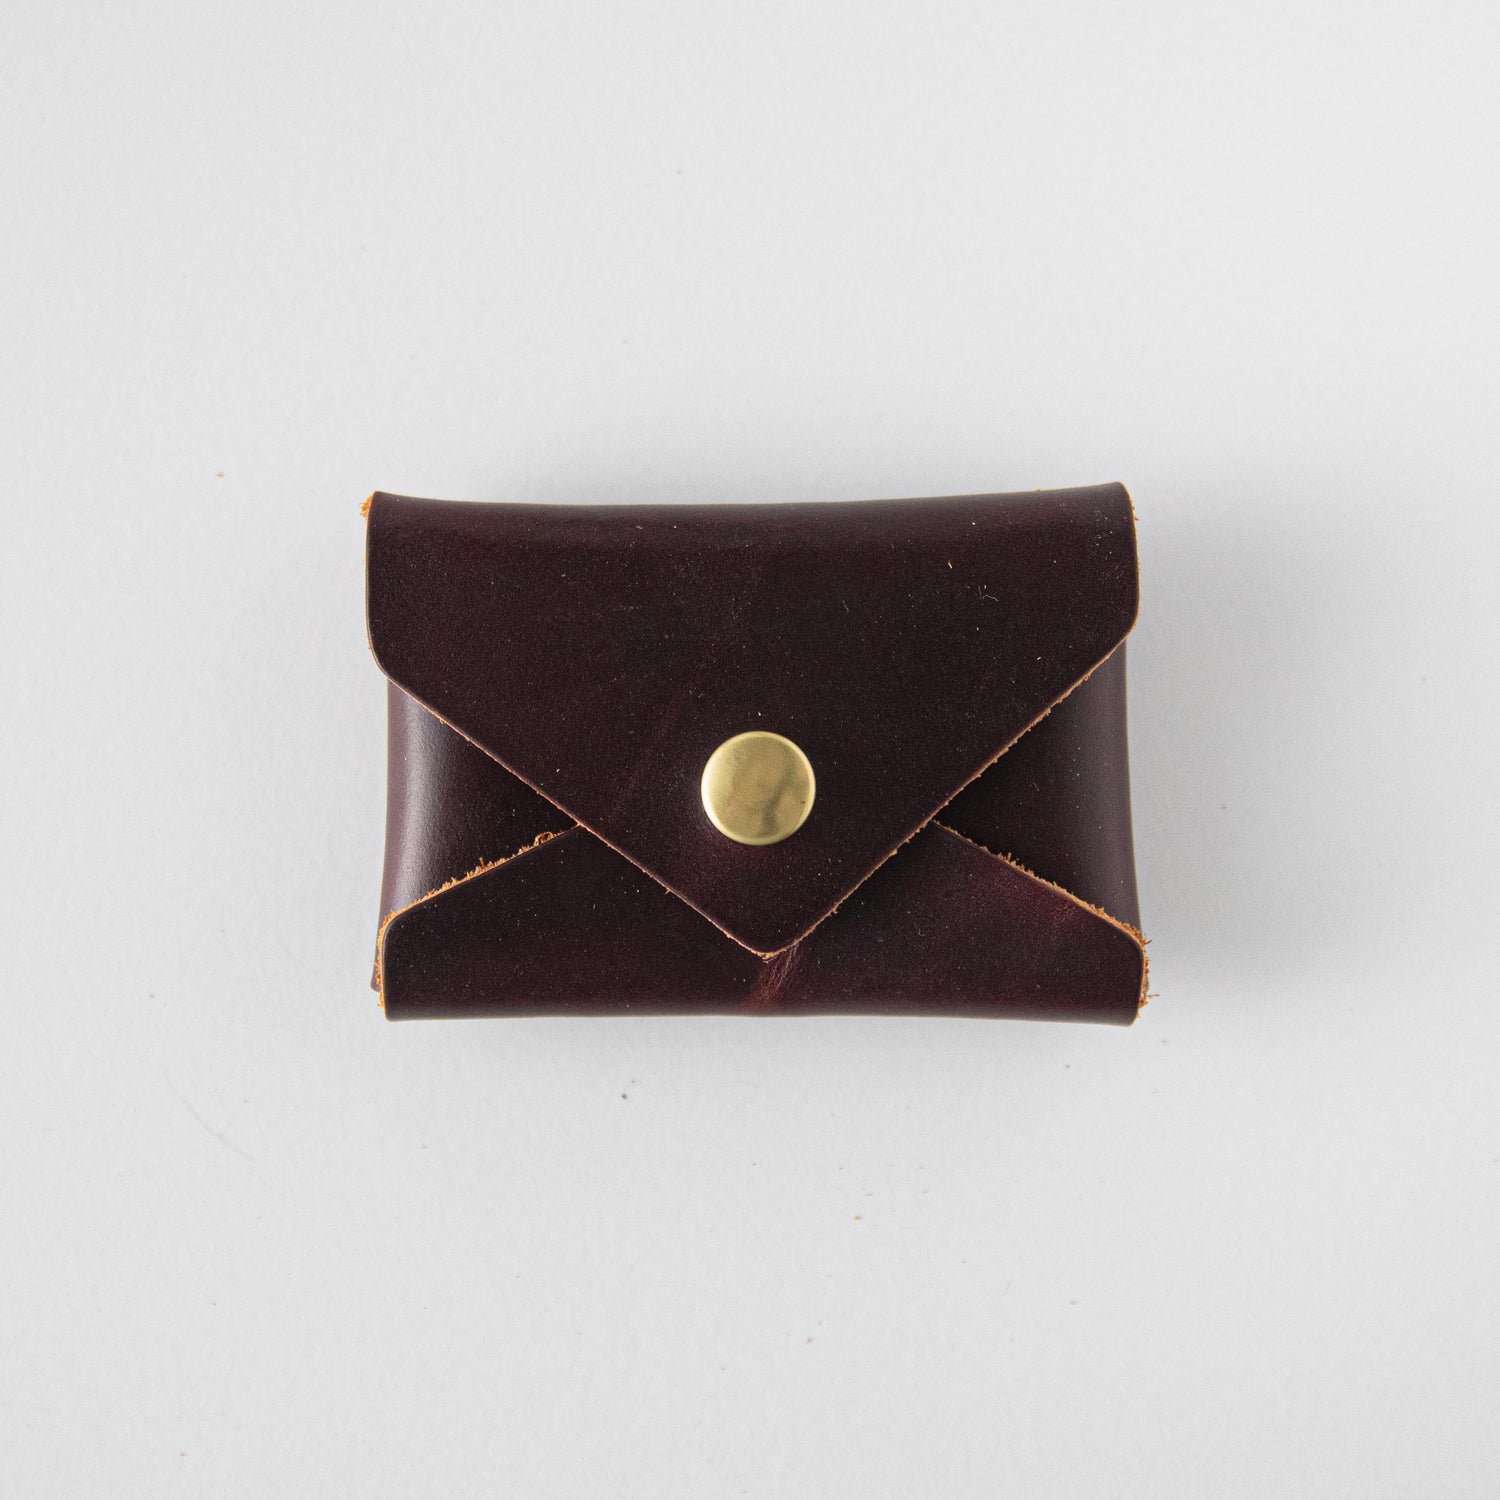 Oxblood Card Envelope- card holder wallet - leather wallet made in America at KMM &amp; Co.